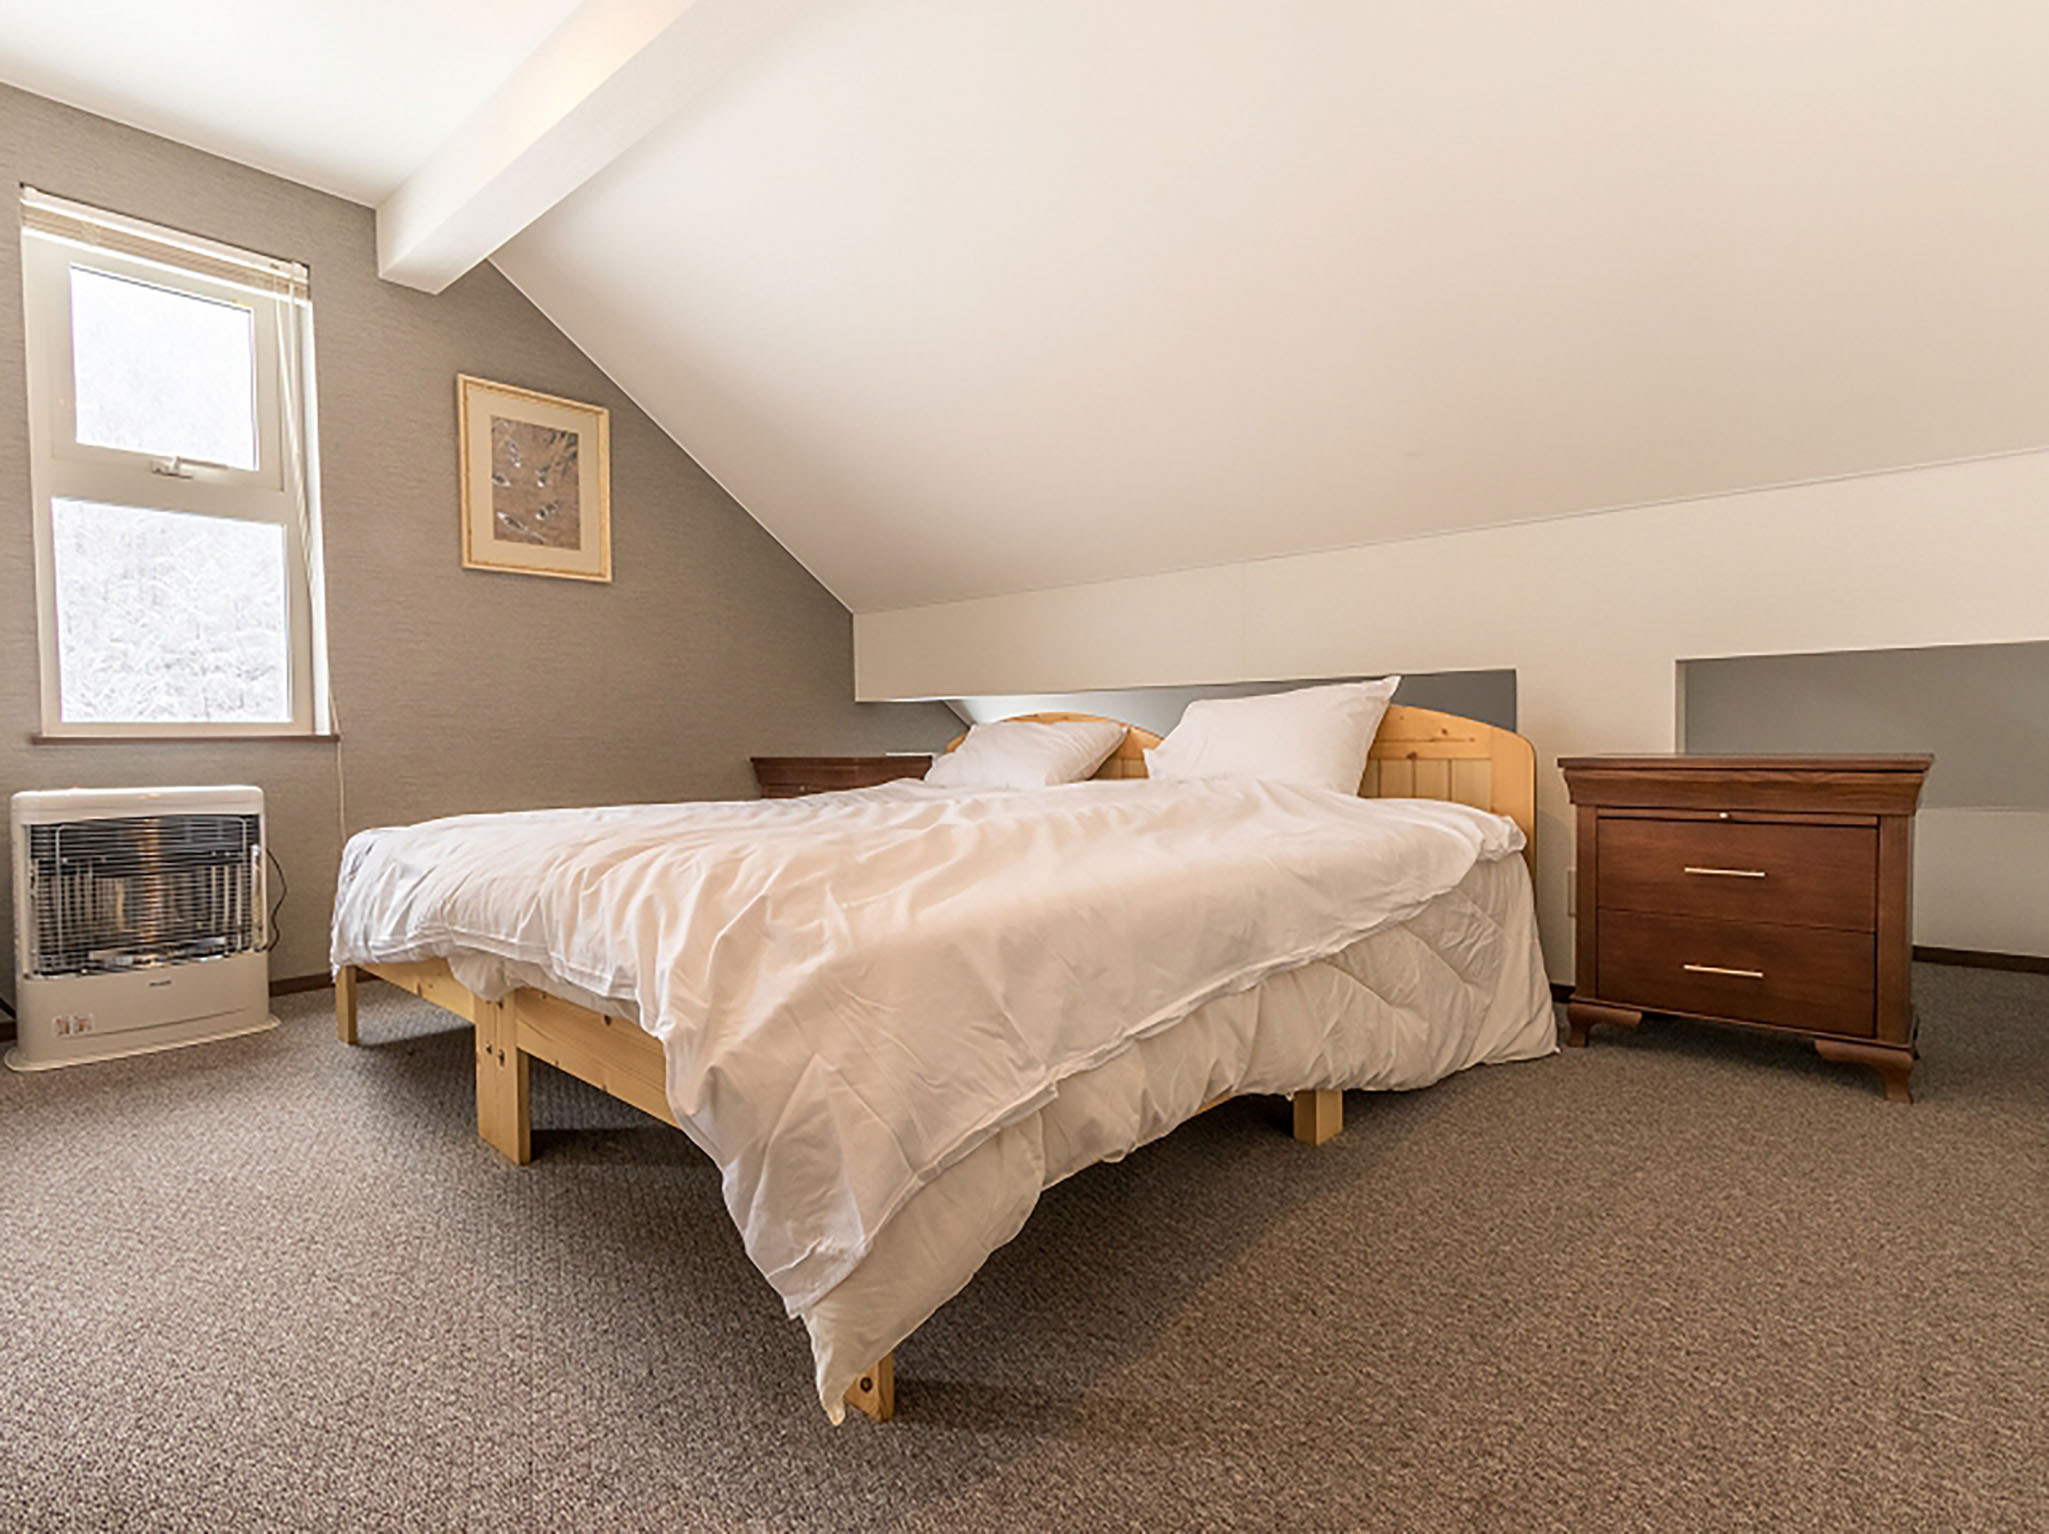 Sakura Lodge - Bedroom layout